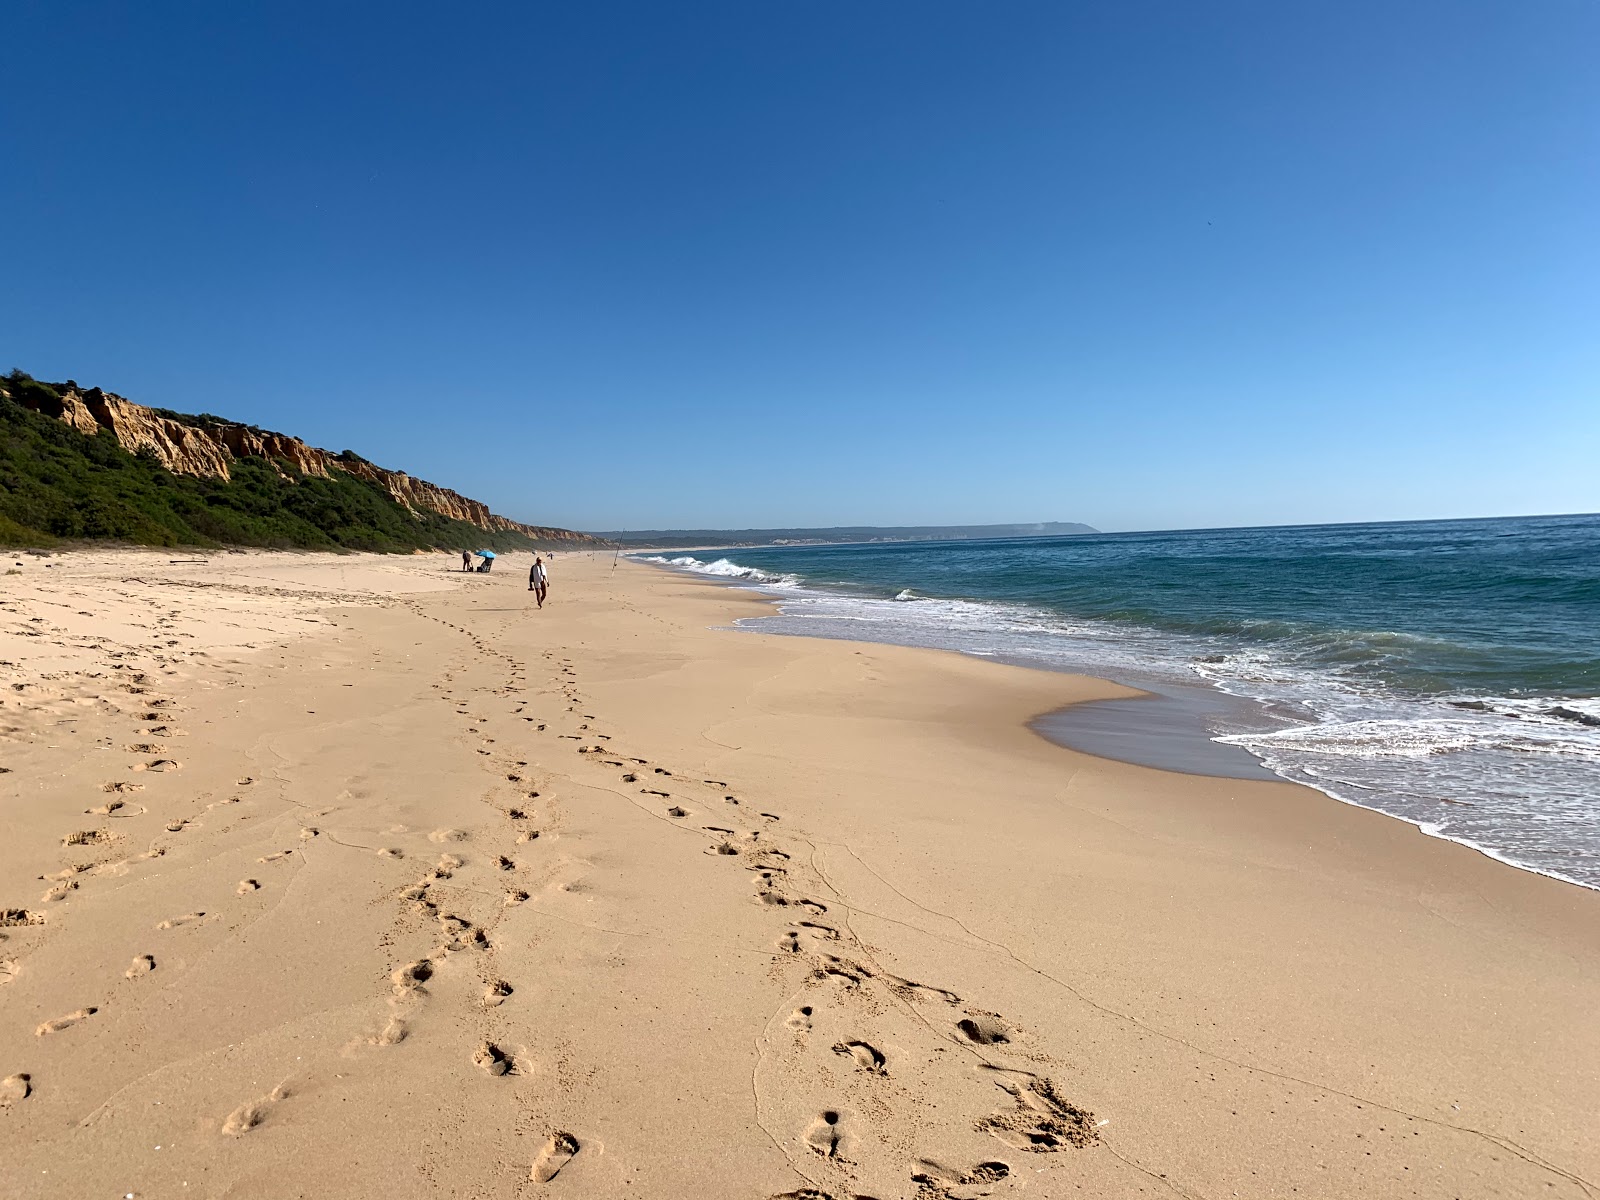 Fotografie cu Praia da Fonte da Telha cu o suprafață de nisip fin alb